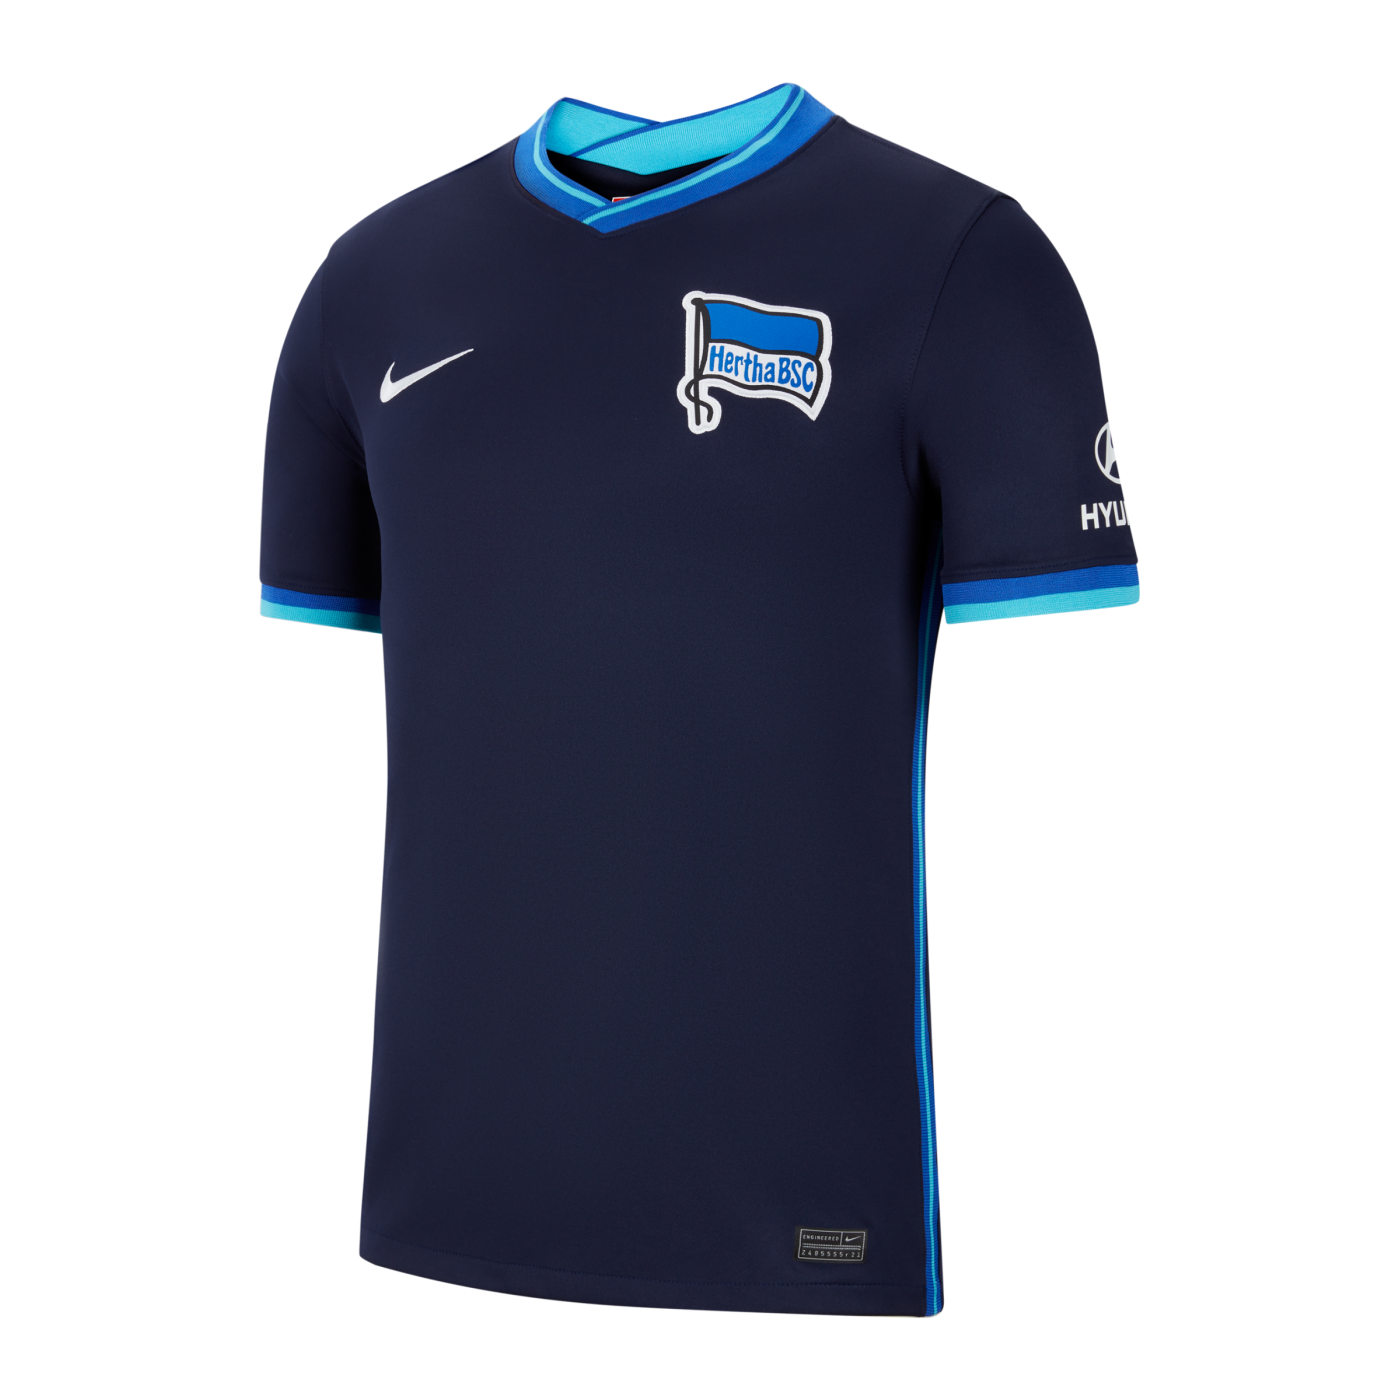 Nike Hertha Bsc Trikot Away 20212022 Blau F499 Replicas Fanshop